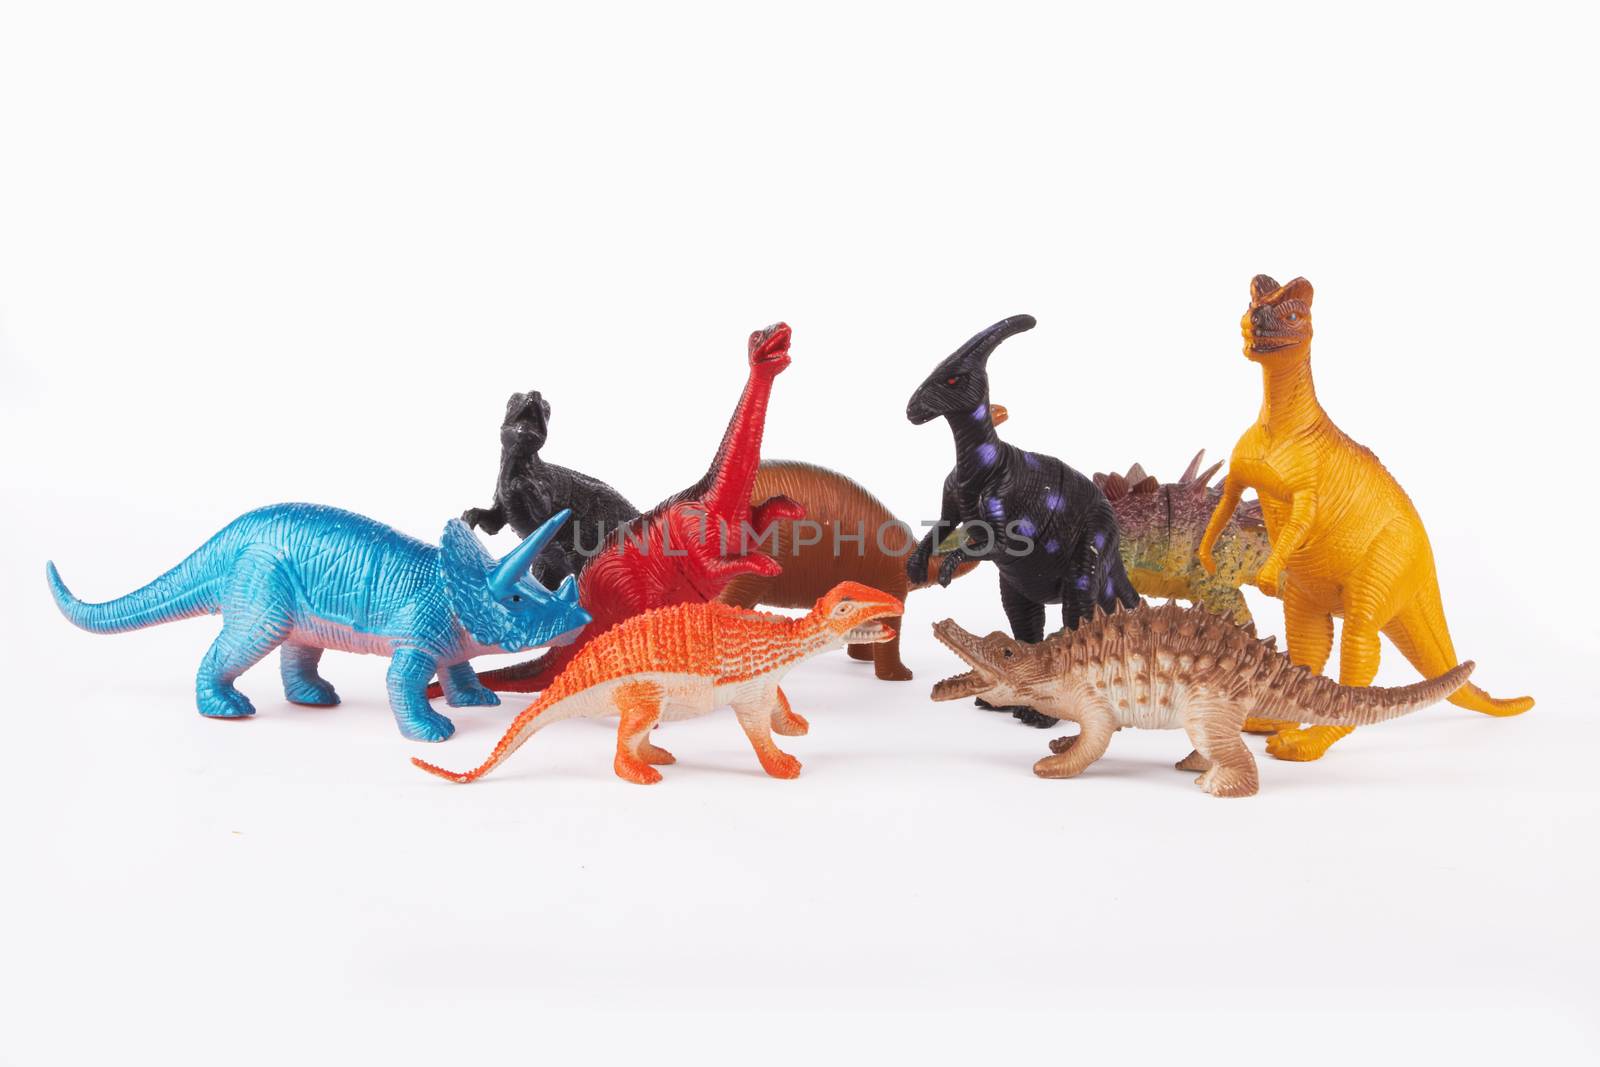 dinosaurs by pioneer111